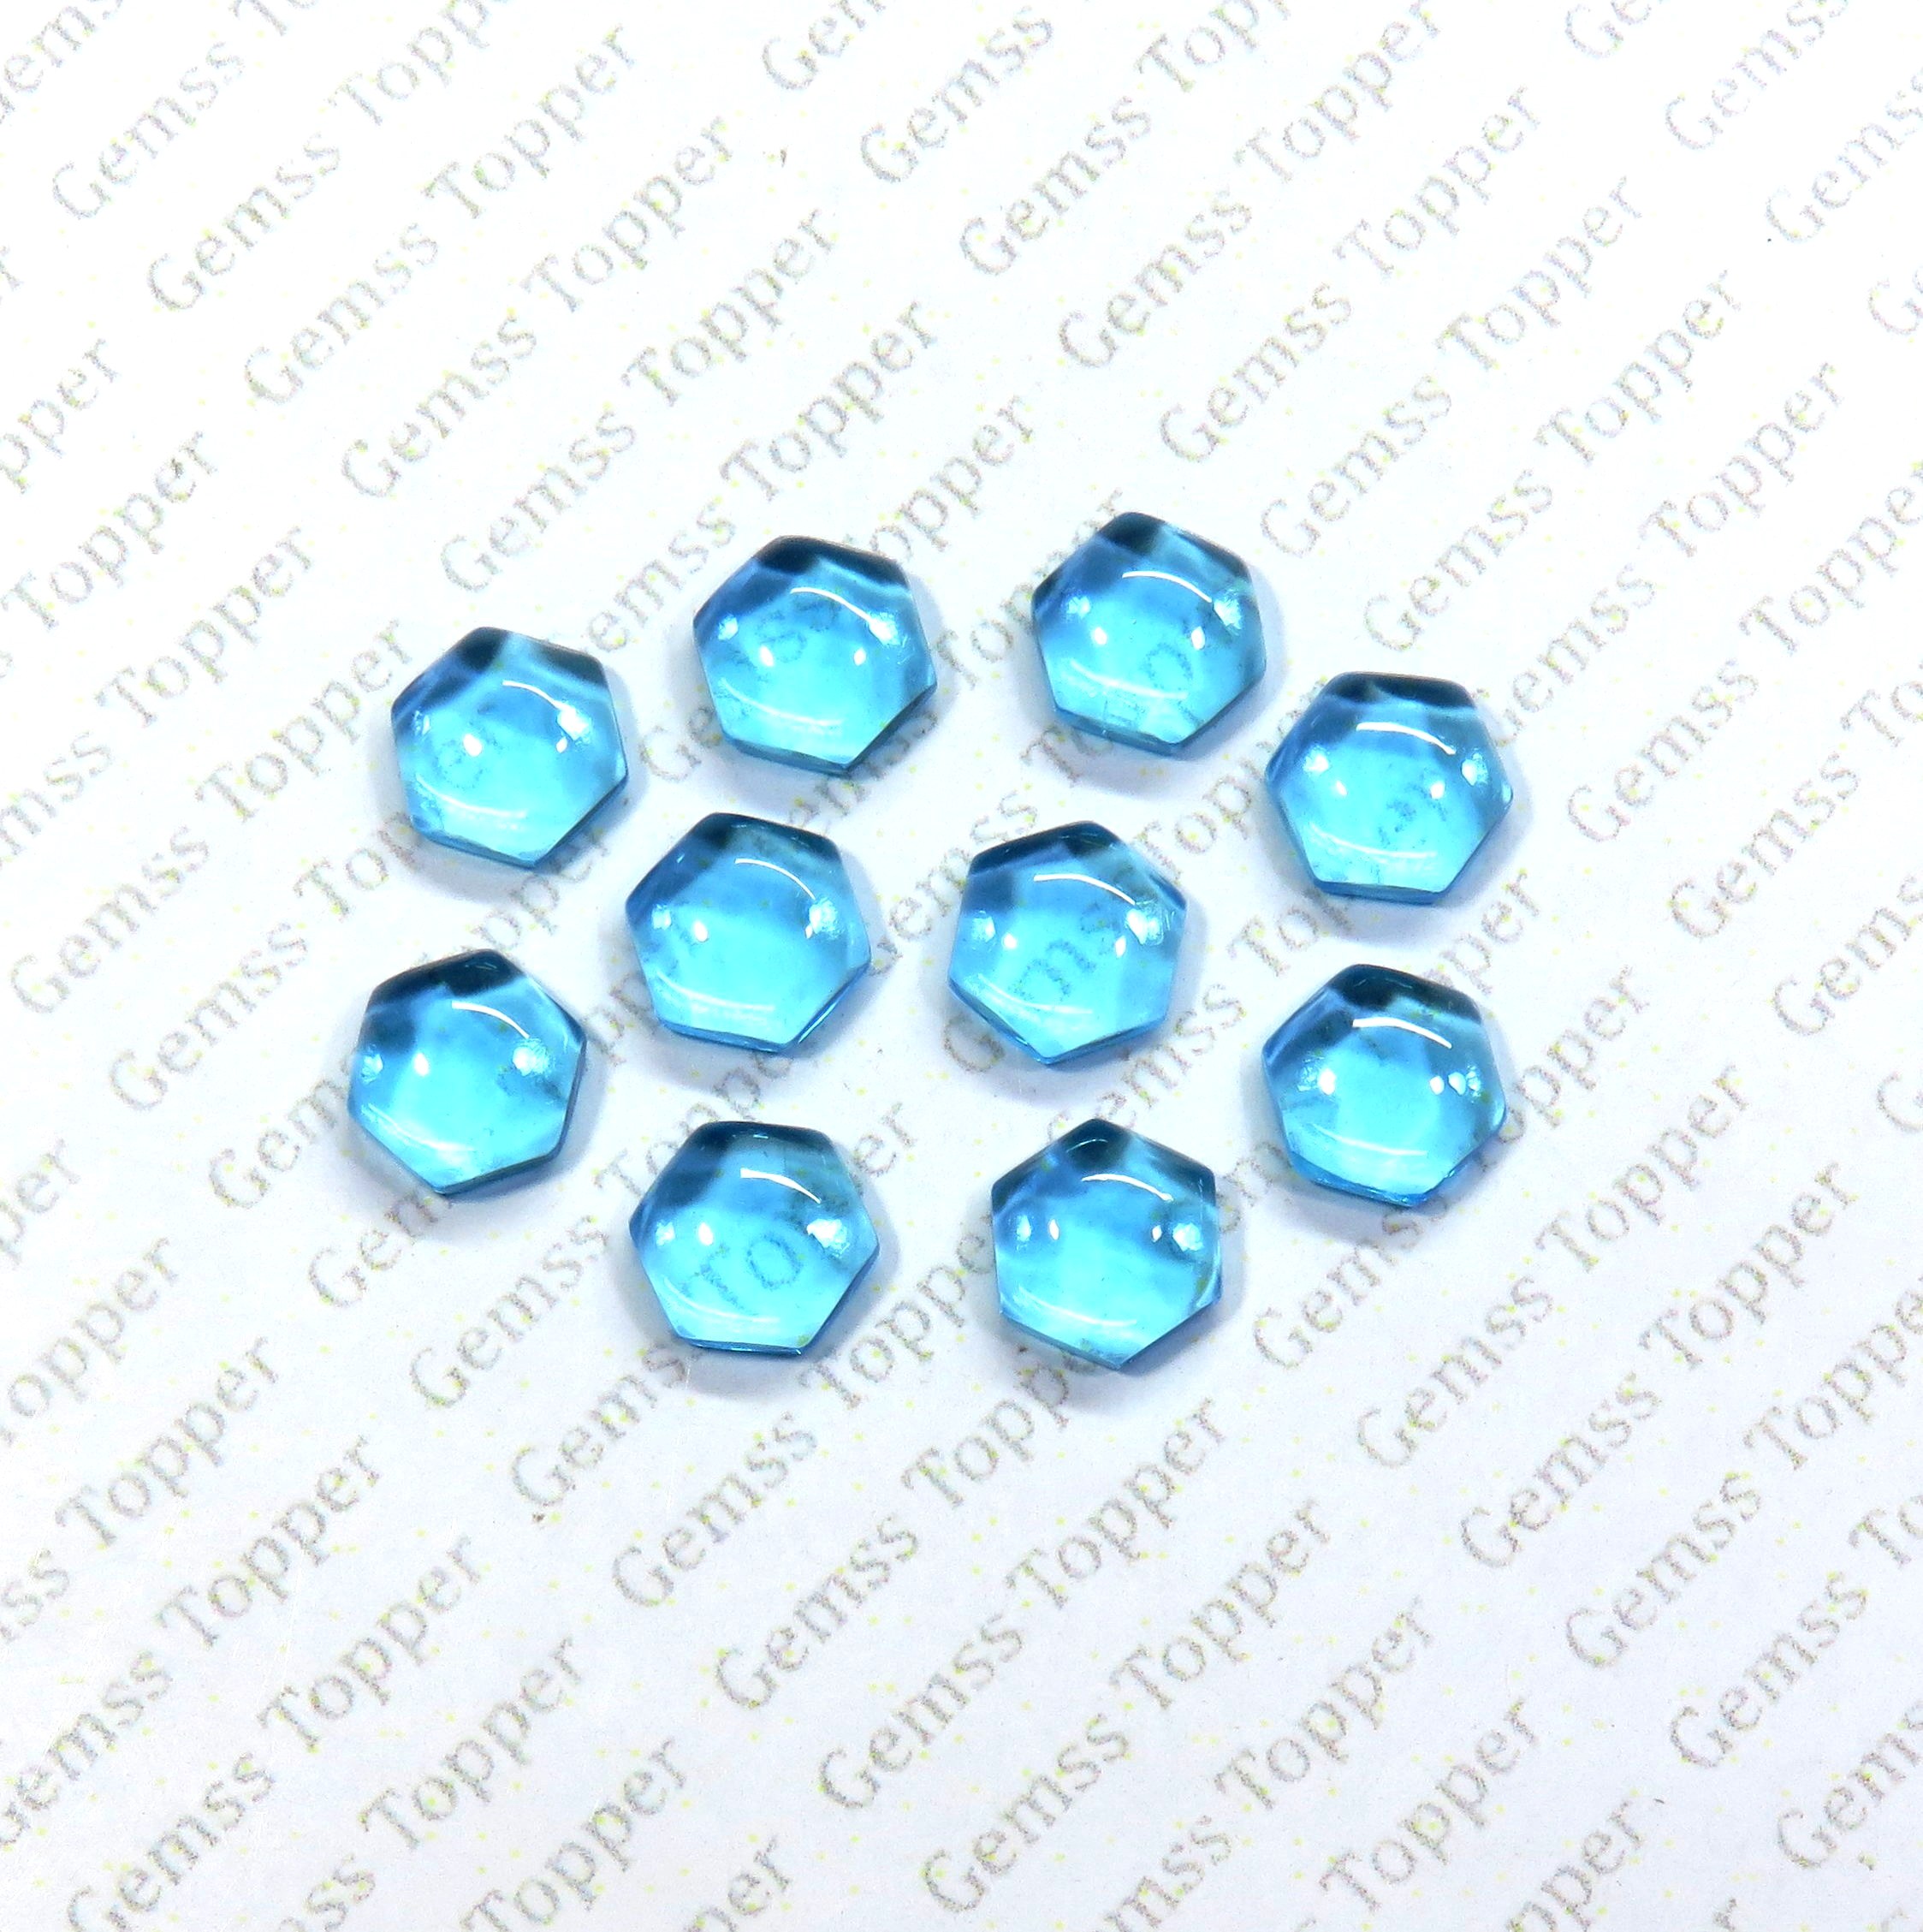 100% Natural Swiss Blue Topaz 8 mm Hexagon Cabochon- AAA Quality Swiss Blue Topaz Smooth Cabochon